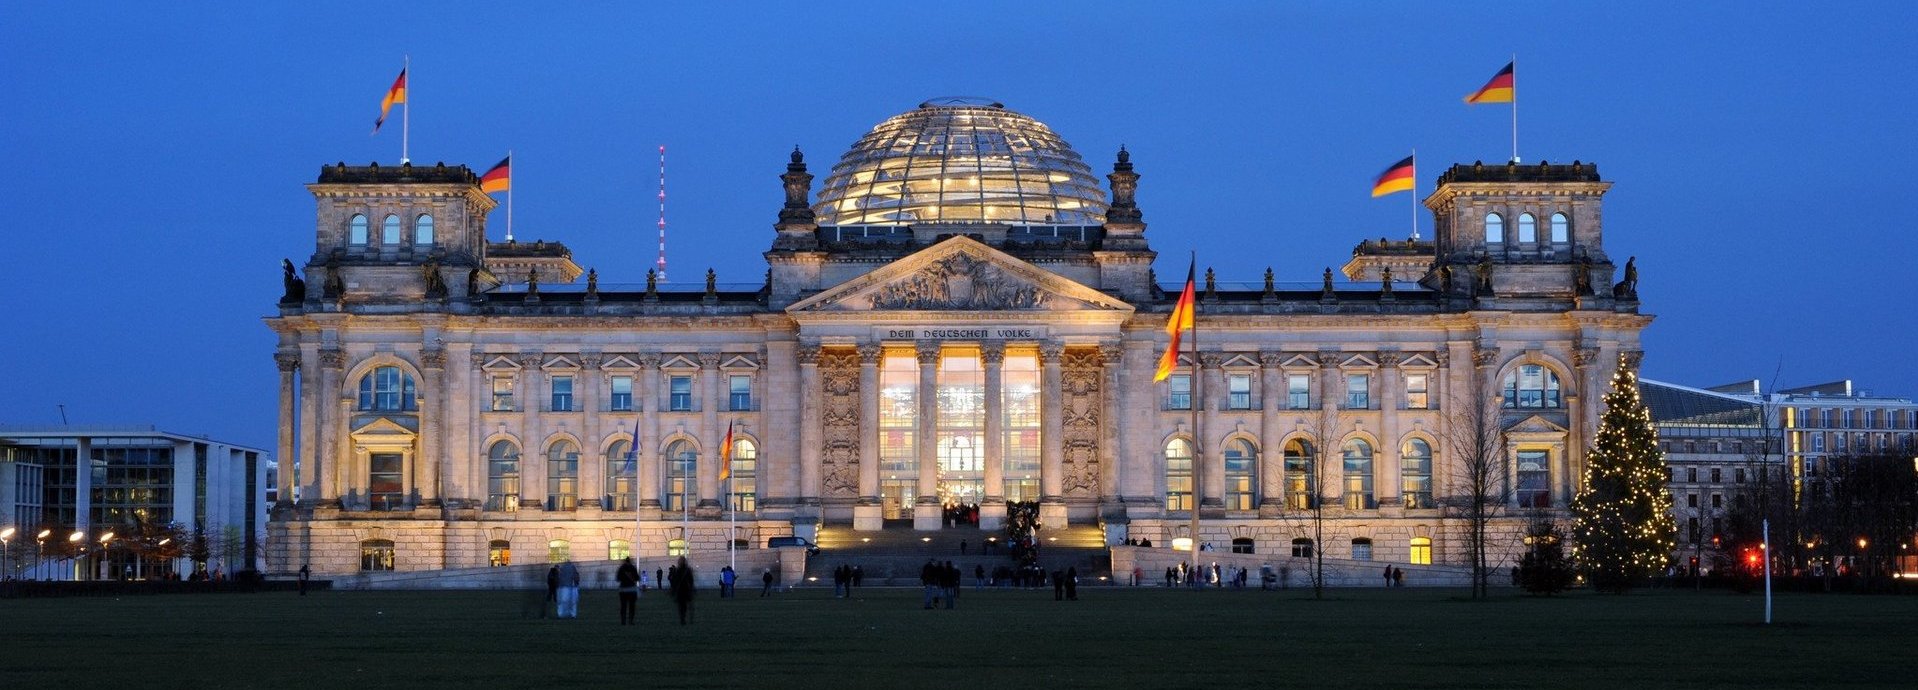 Angeleuchtetes Bundestagsgebäude vor dunkelblauem Himmel